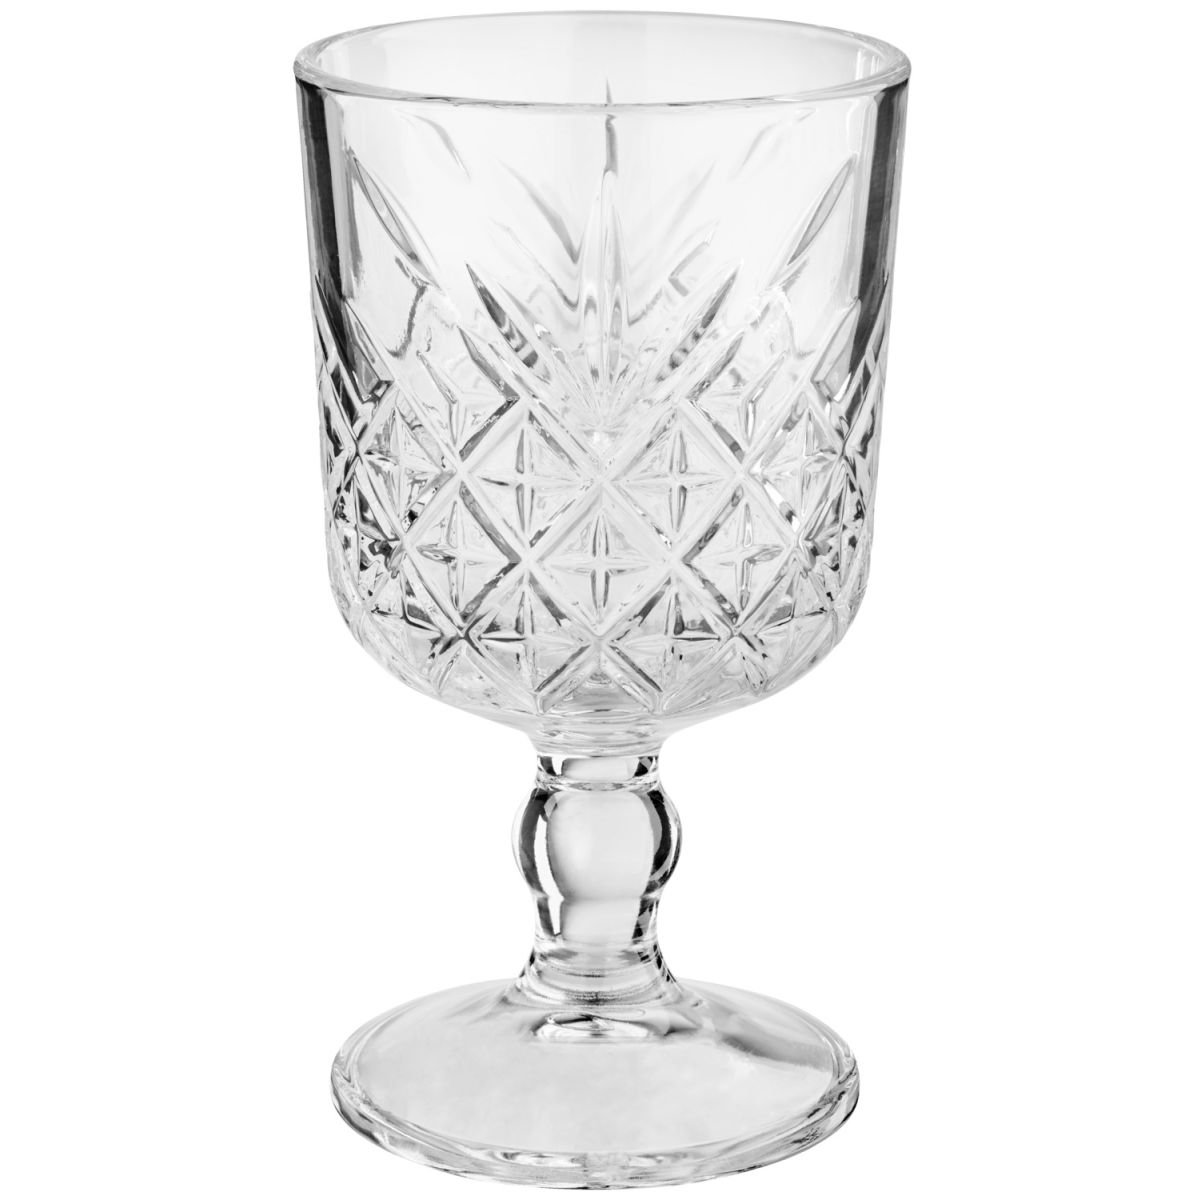 Pasabahçe Cocktailglas Timeless; 320ml, 8.8x15.1 cm (ØxH); transparant; 12 stuk / verpakking